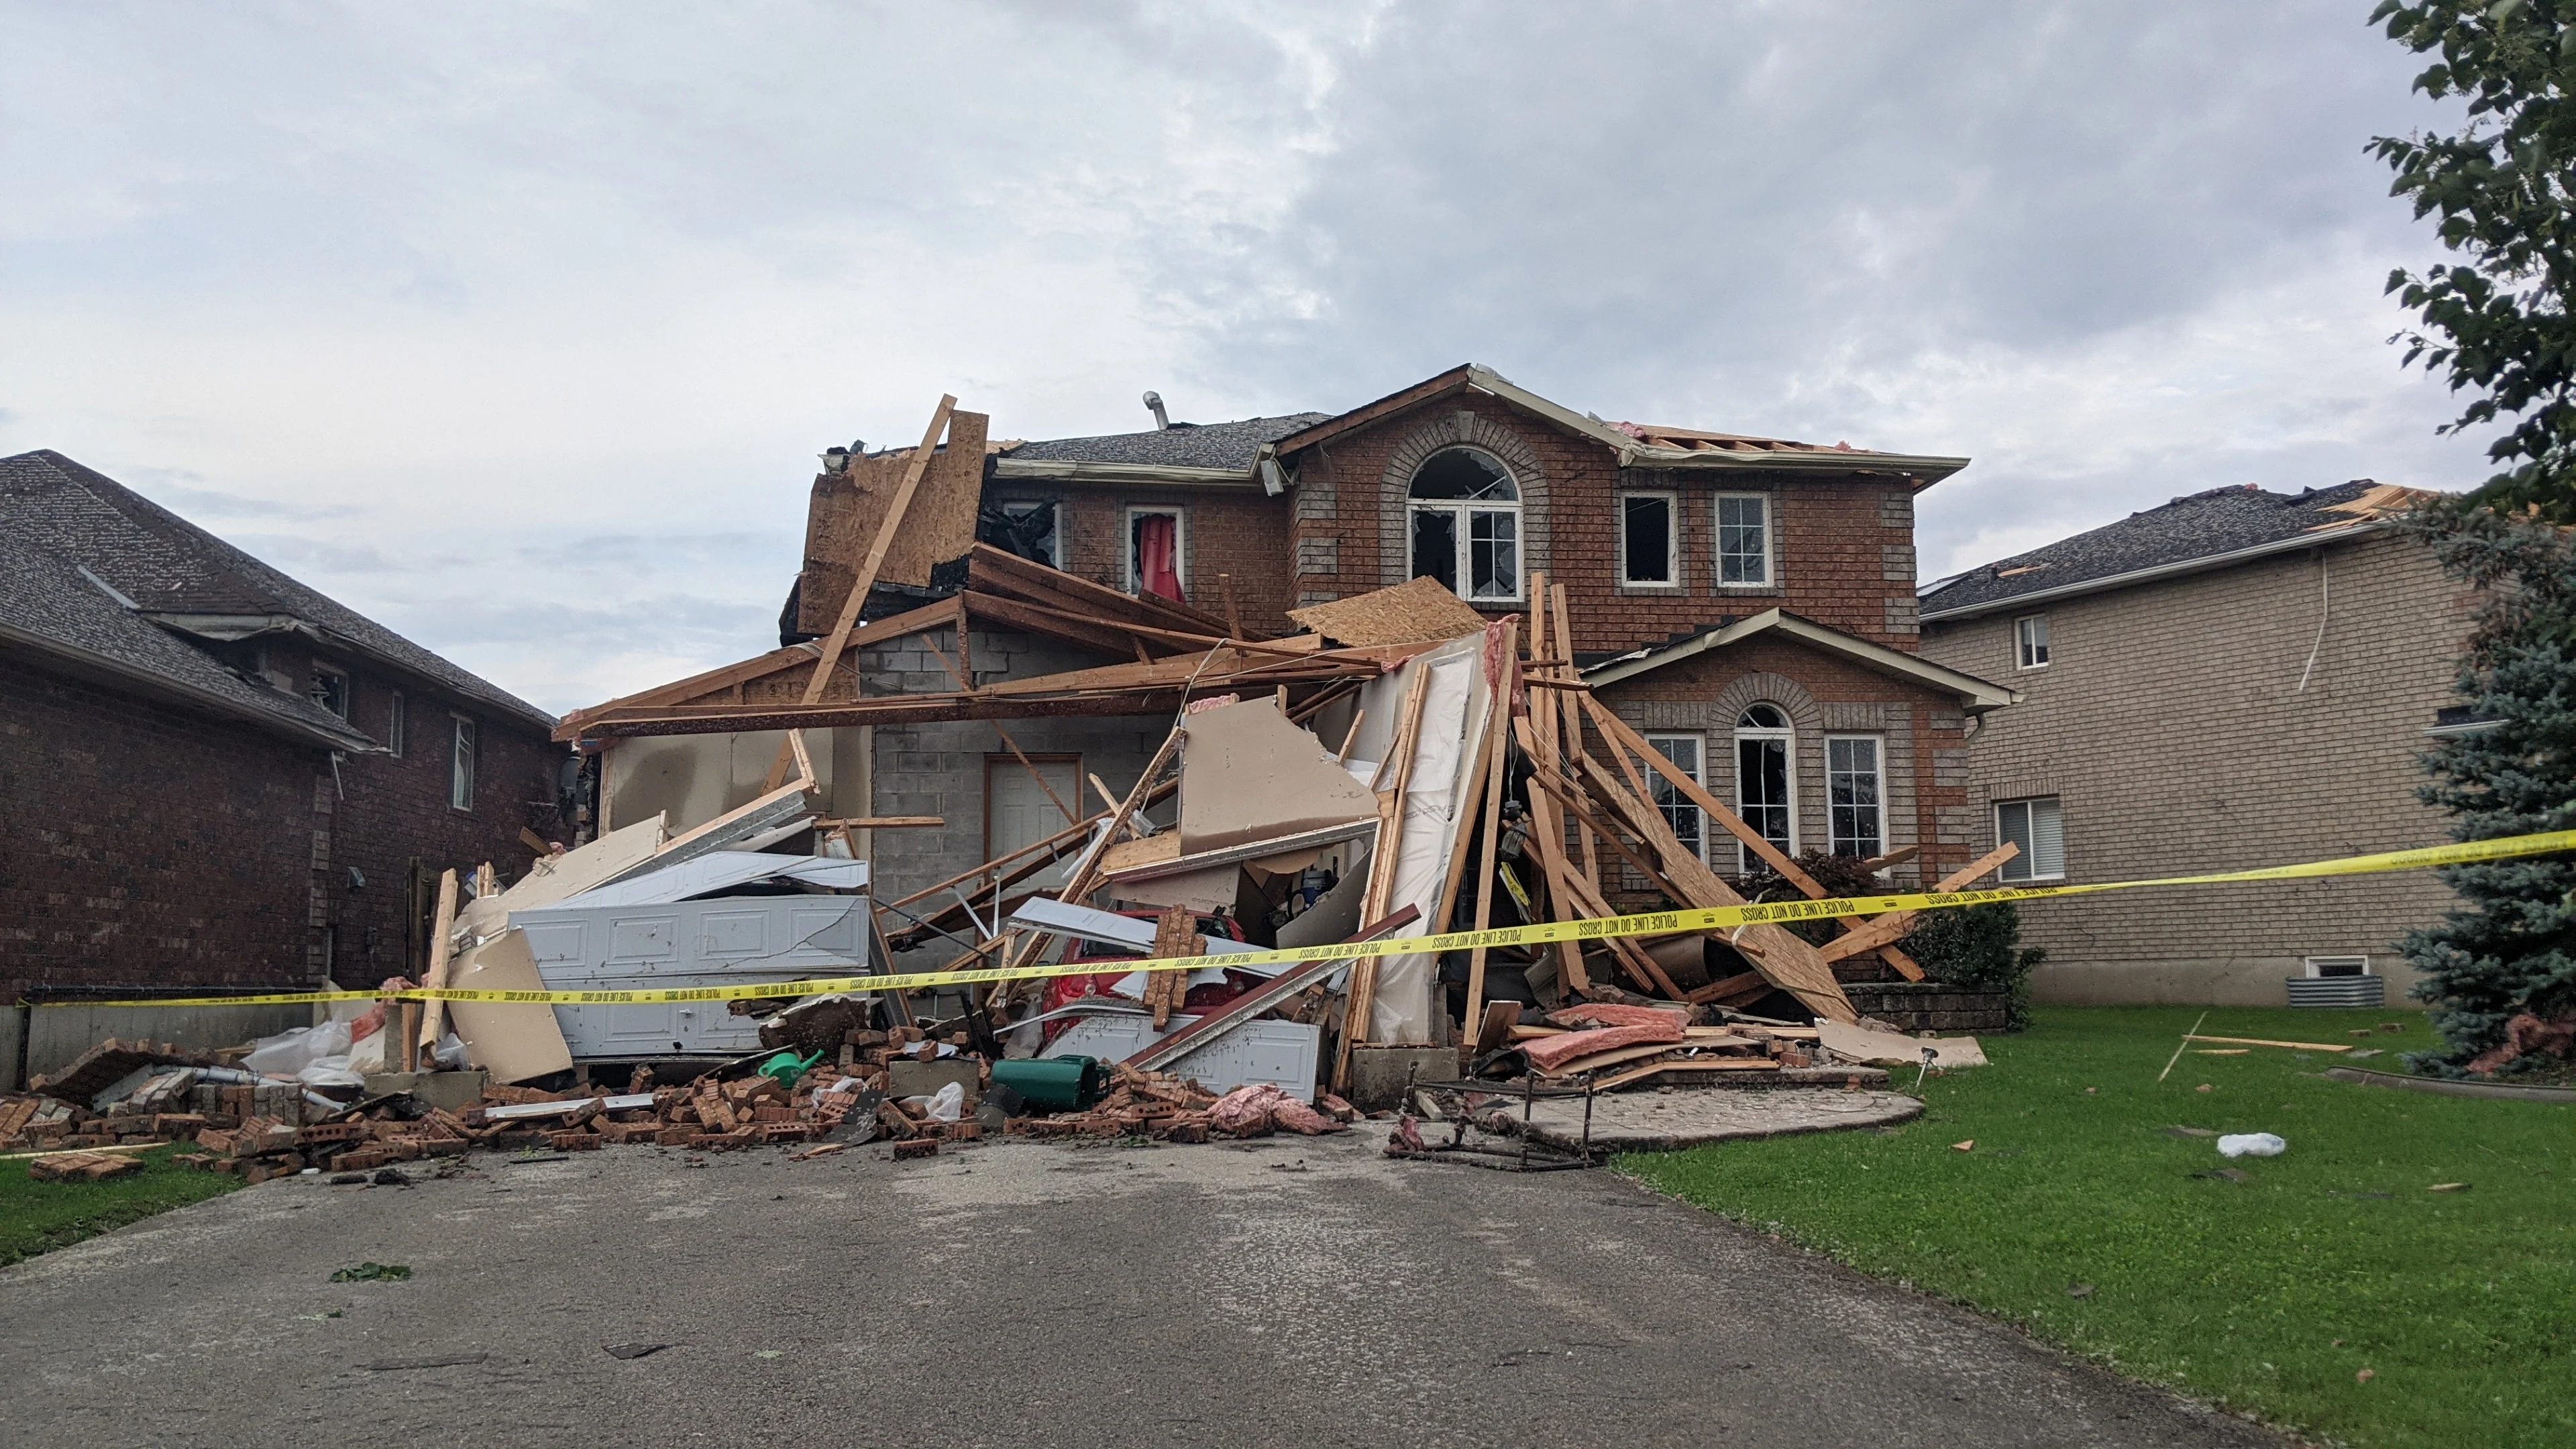 1 Barrie, Ontario, Tornado. July 15, 2021. Credit: Marta Czurylowicz